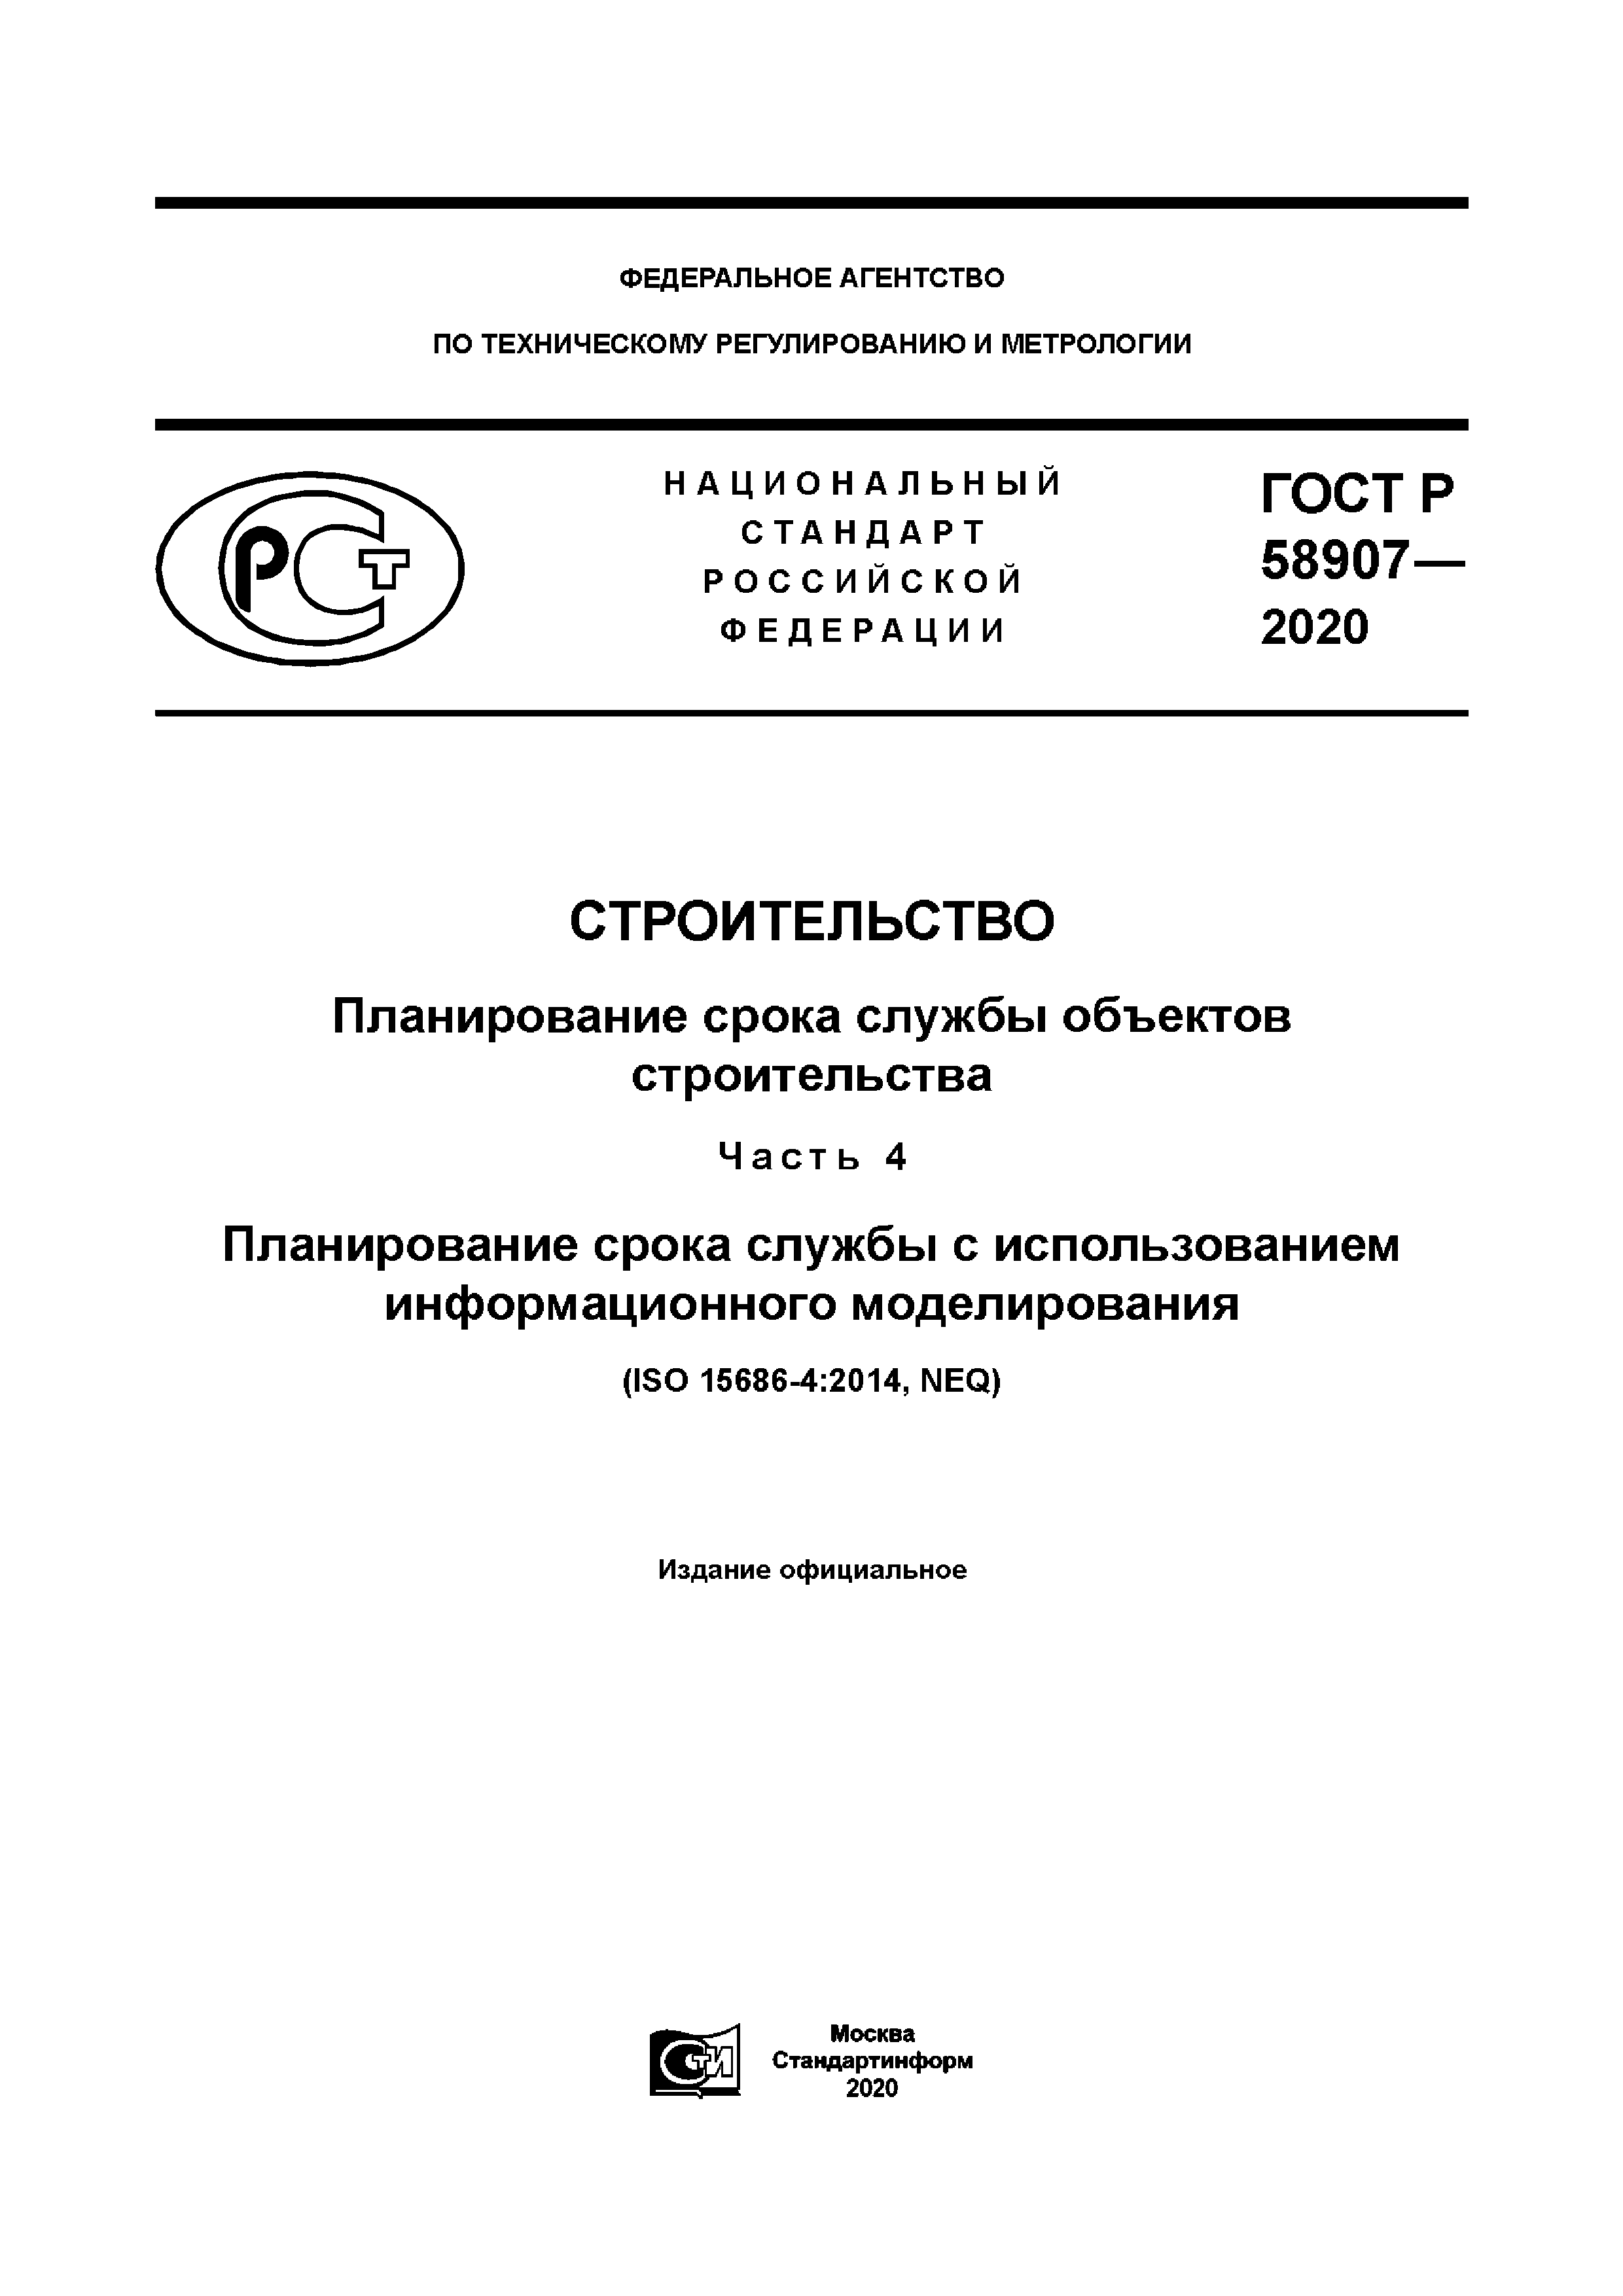 ГОСТ Р 58907-2020